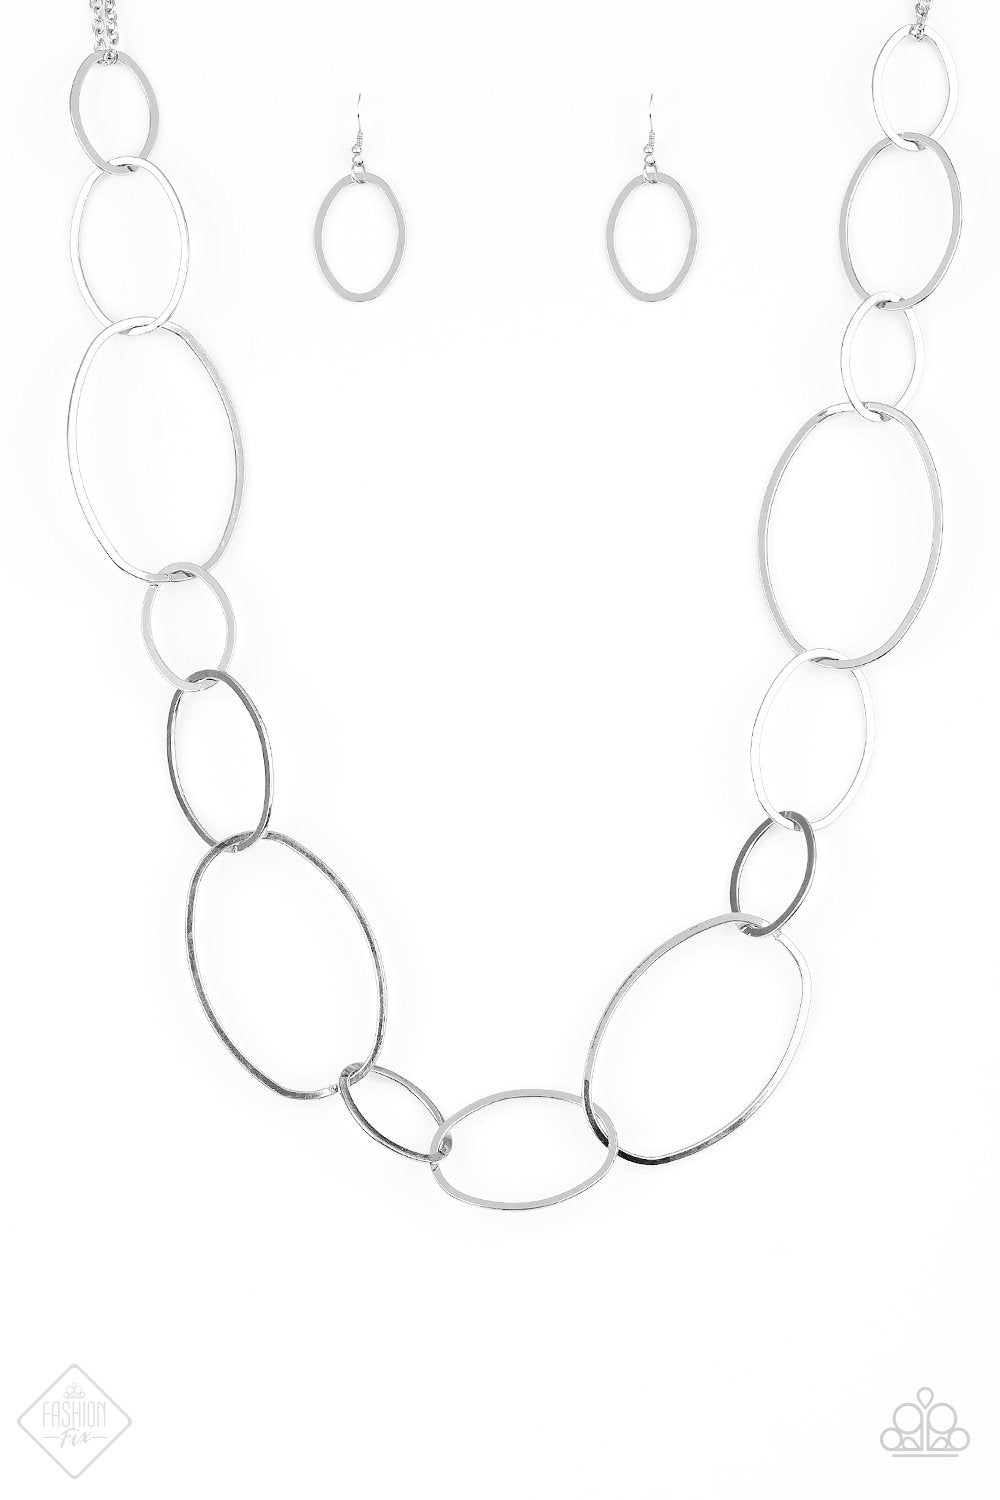 City Circuit - Silver necklace